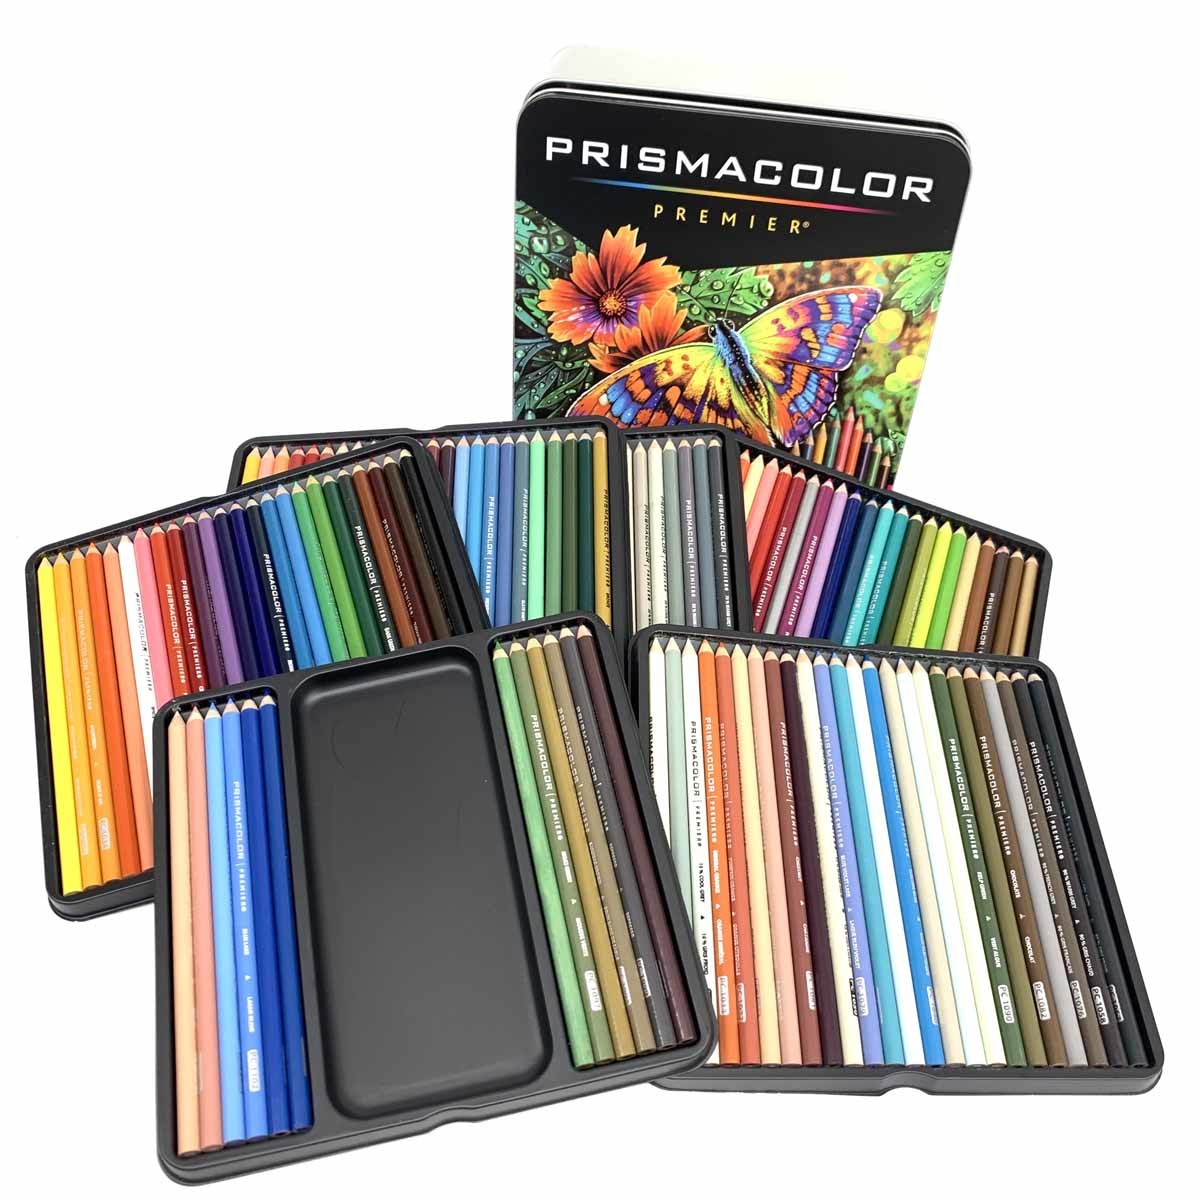 PRISMACOLOR プリズマカラー PREMIER 色鉛筆 132色 マルチカラー アート 文具 PEN(色鉛筆)｜売買されたオークション情報、yahooの商品情報をアーカイブ公開  - オークファン（aucfan.com）